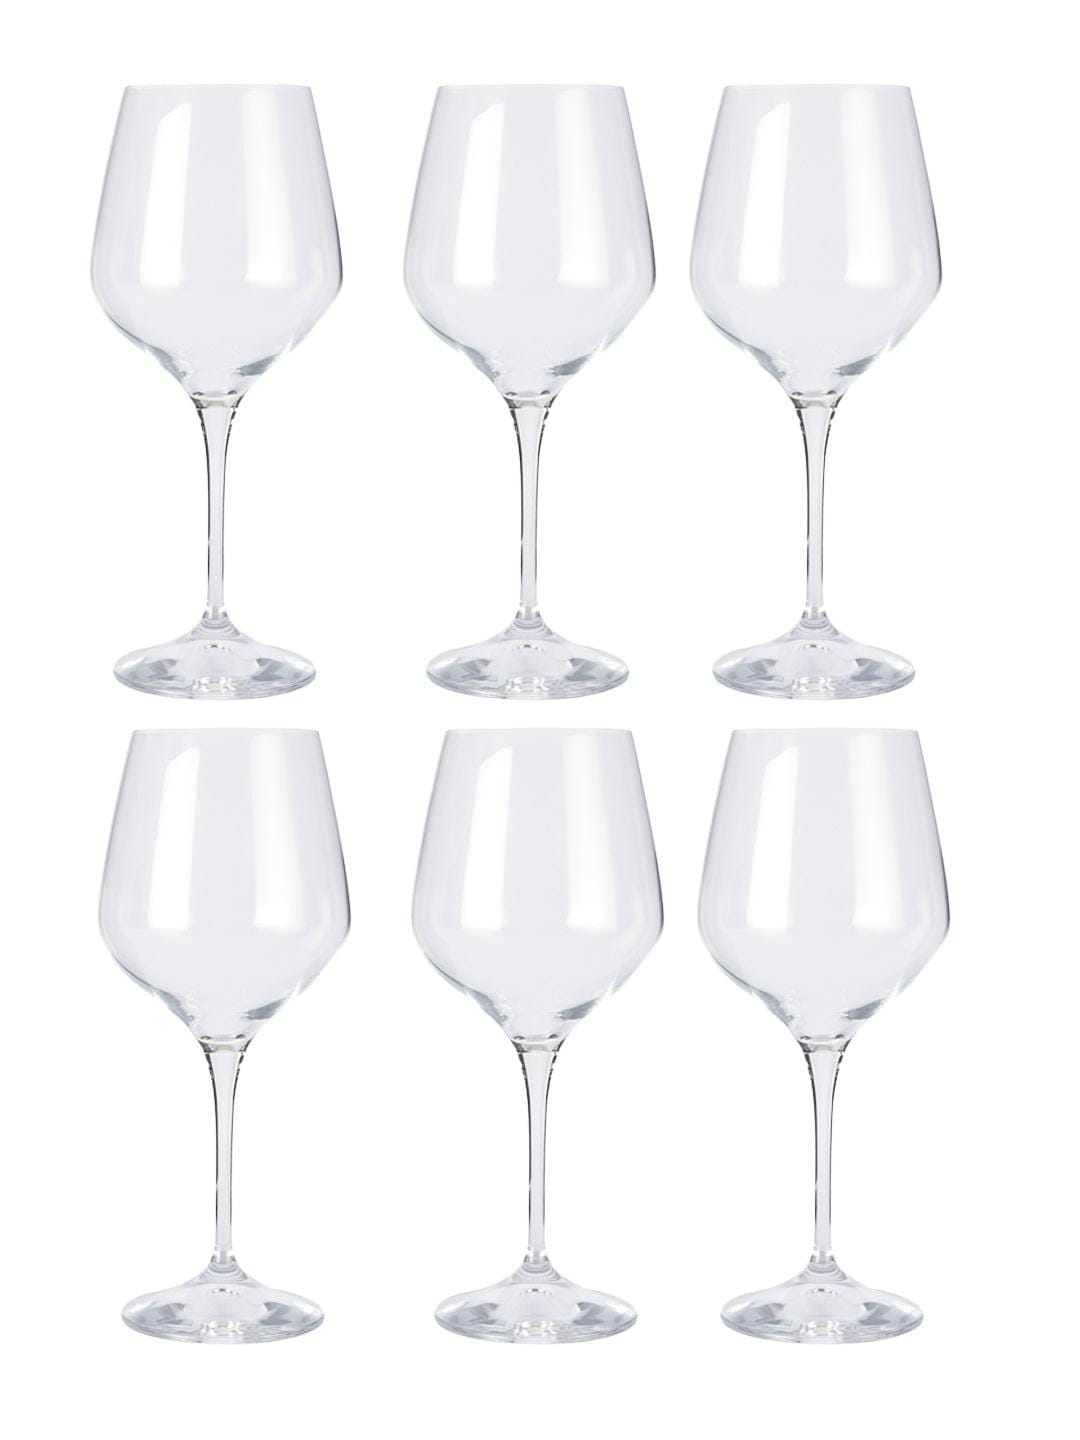 Bohemia Crystal Non Lead Crystal Rebecca Wine Glass 540 ML Set of 6 pcs, Transparent, Non Lead Crystal | Wine Glass